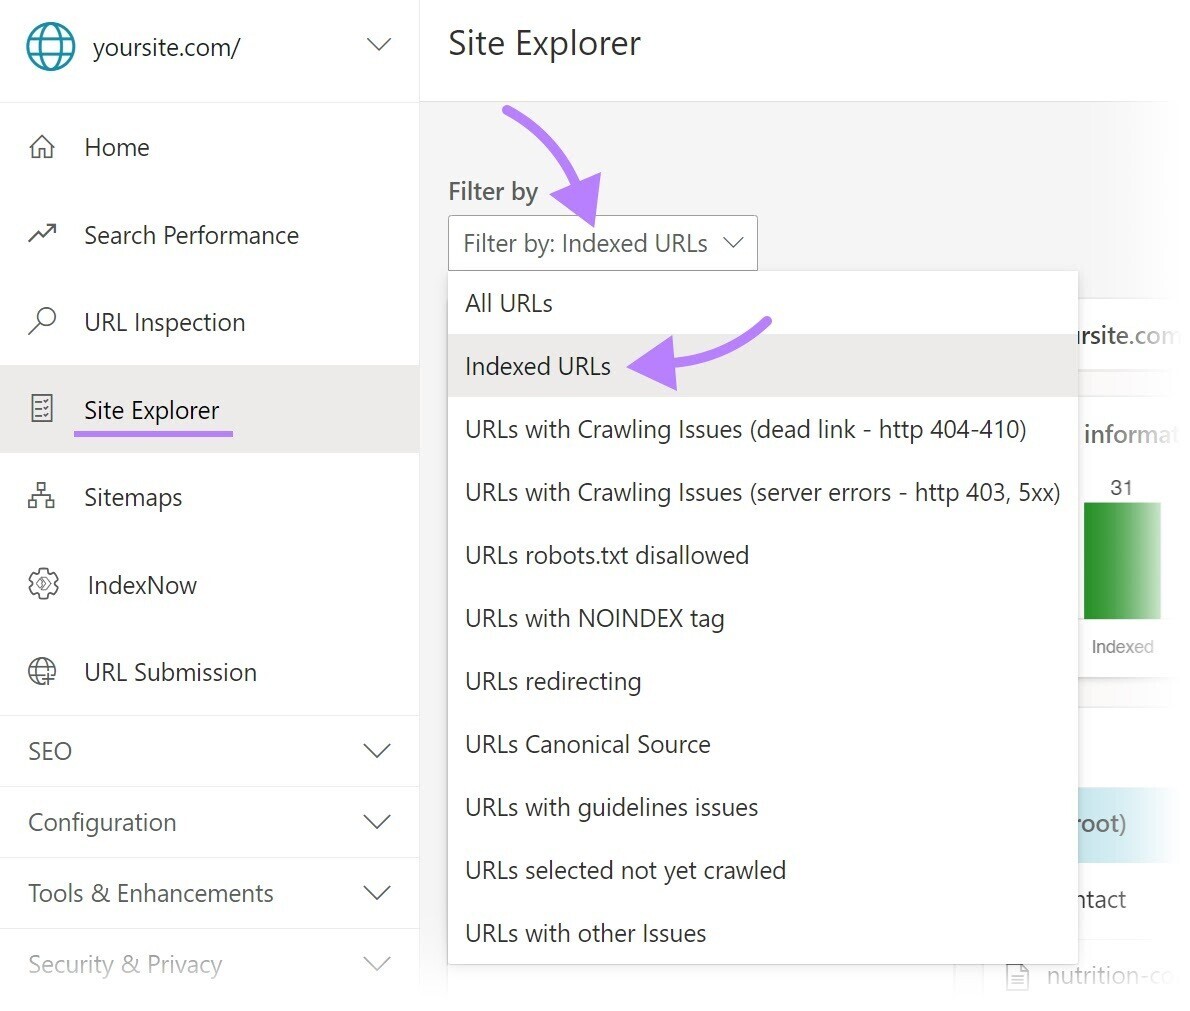 navigation to “Indexed URLs” in Bing Webmaster Tools